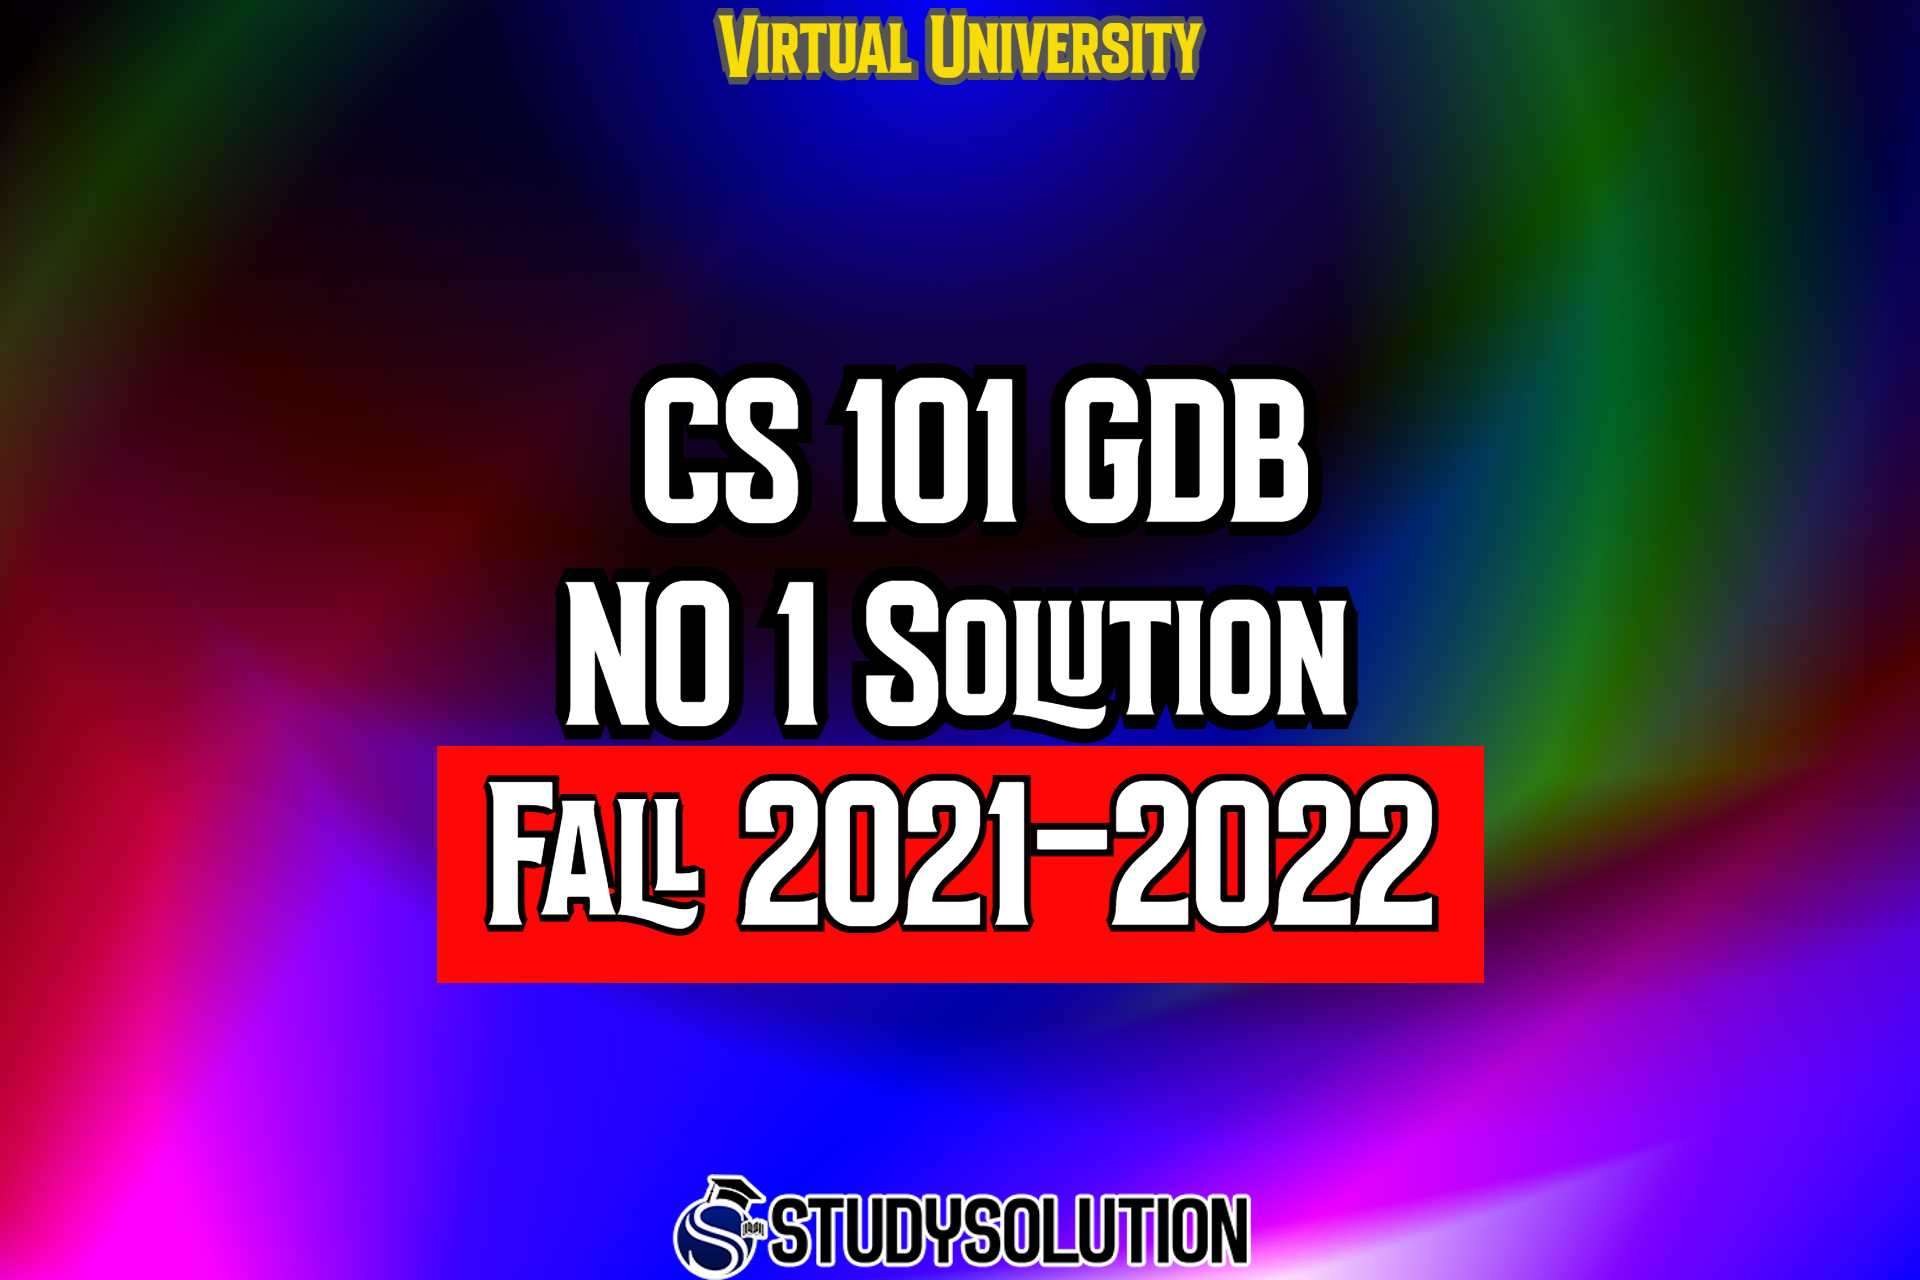 CS101 GDB No 1 Solution Fall 2022